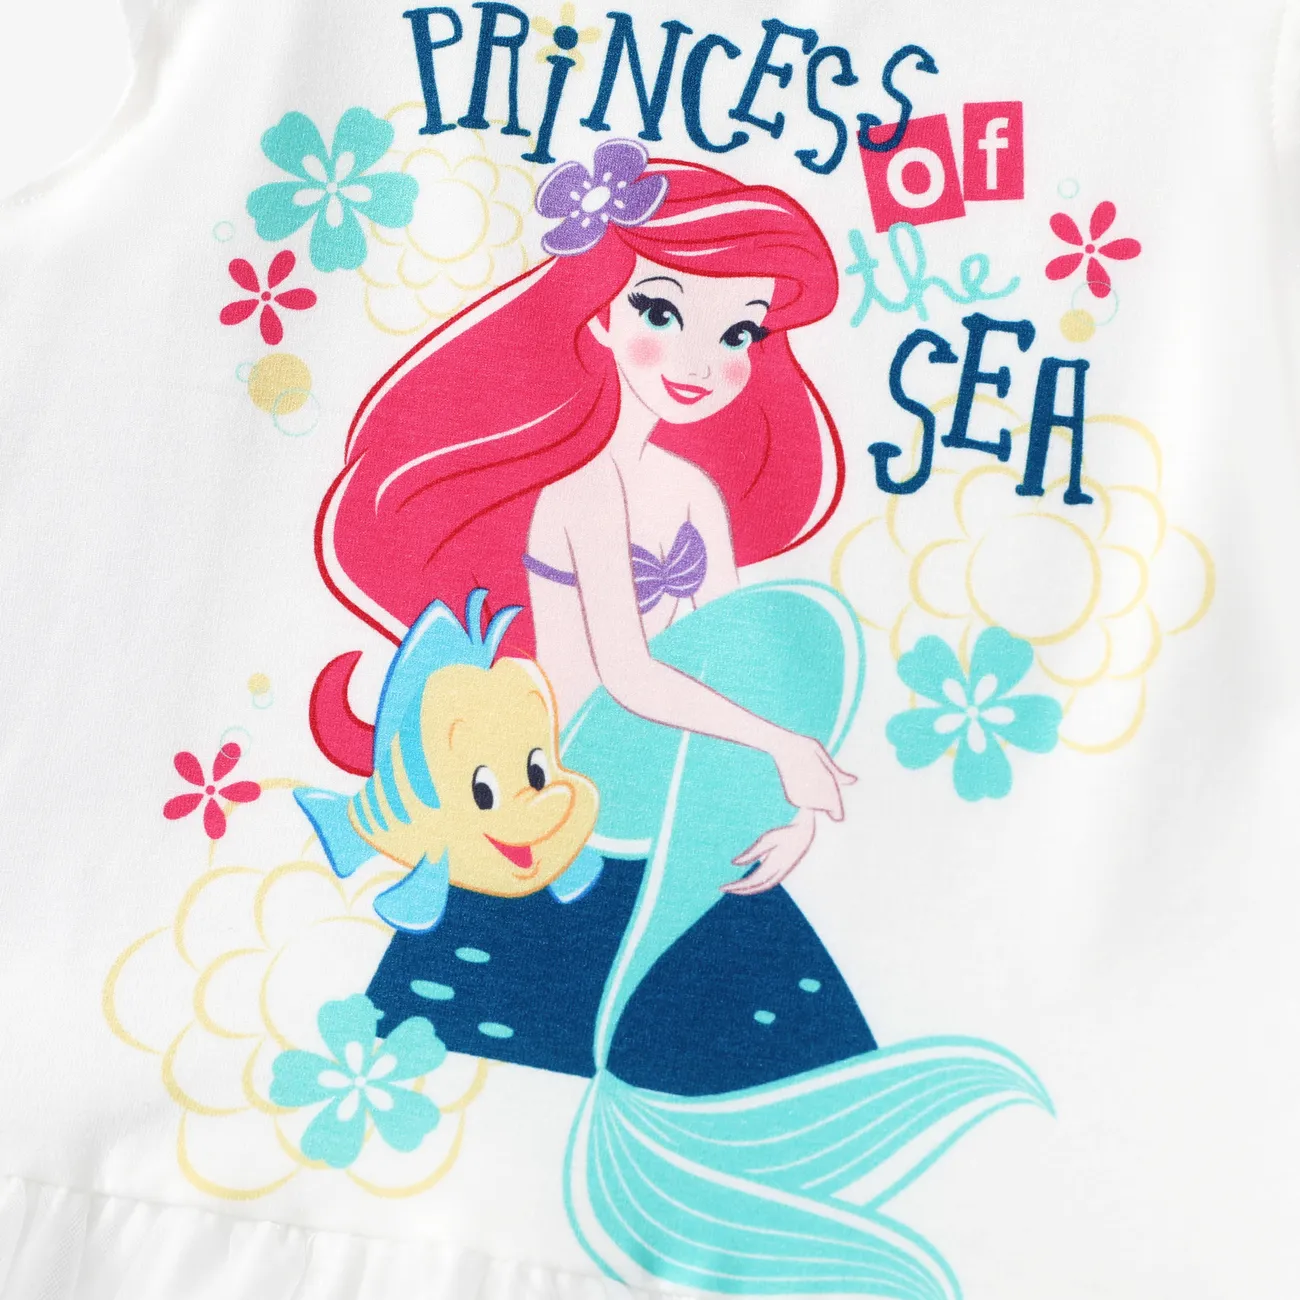 Disney Princess 2 unidades Niño pequeño Chica Volantes Infantil conjuntos de camiseta Blanco big image 1